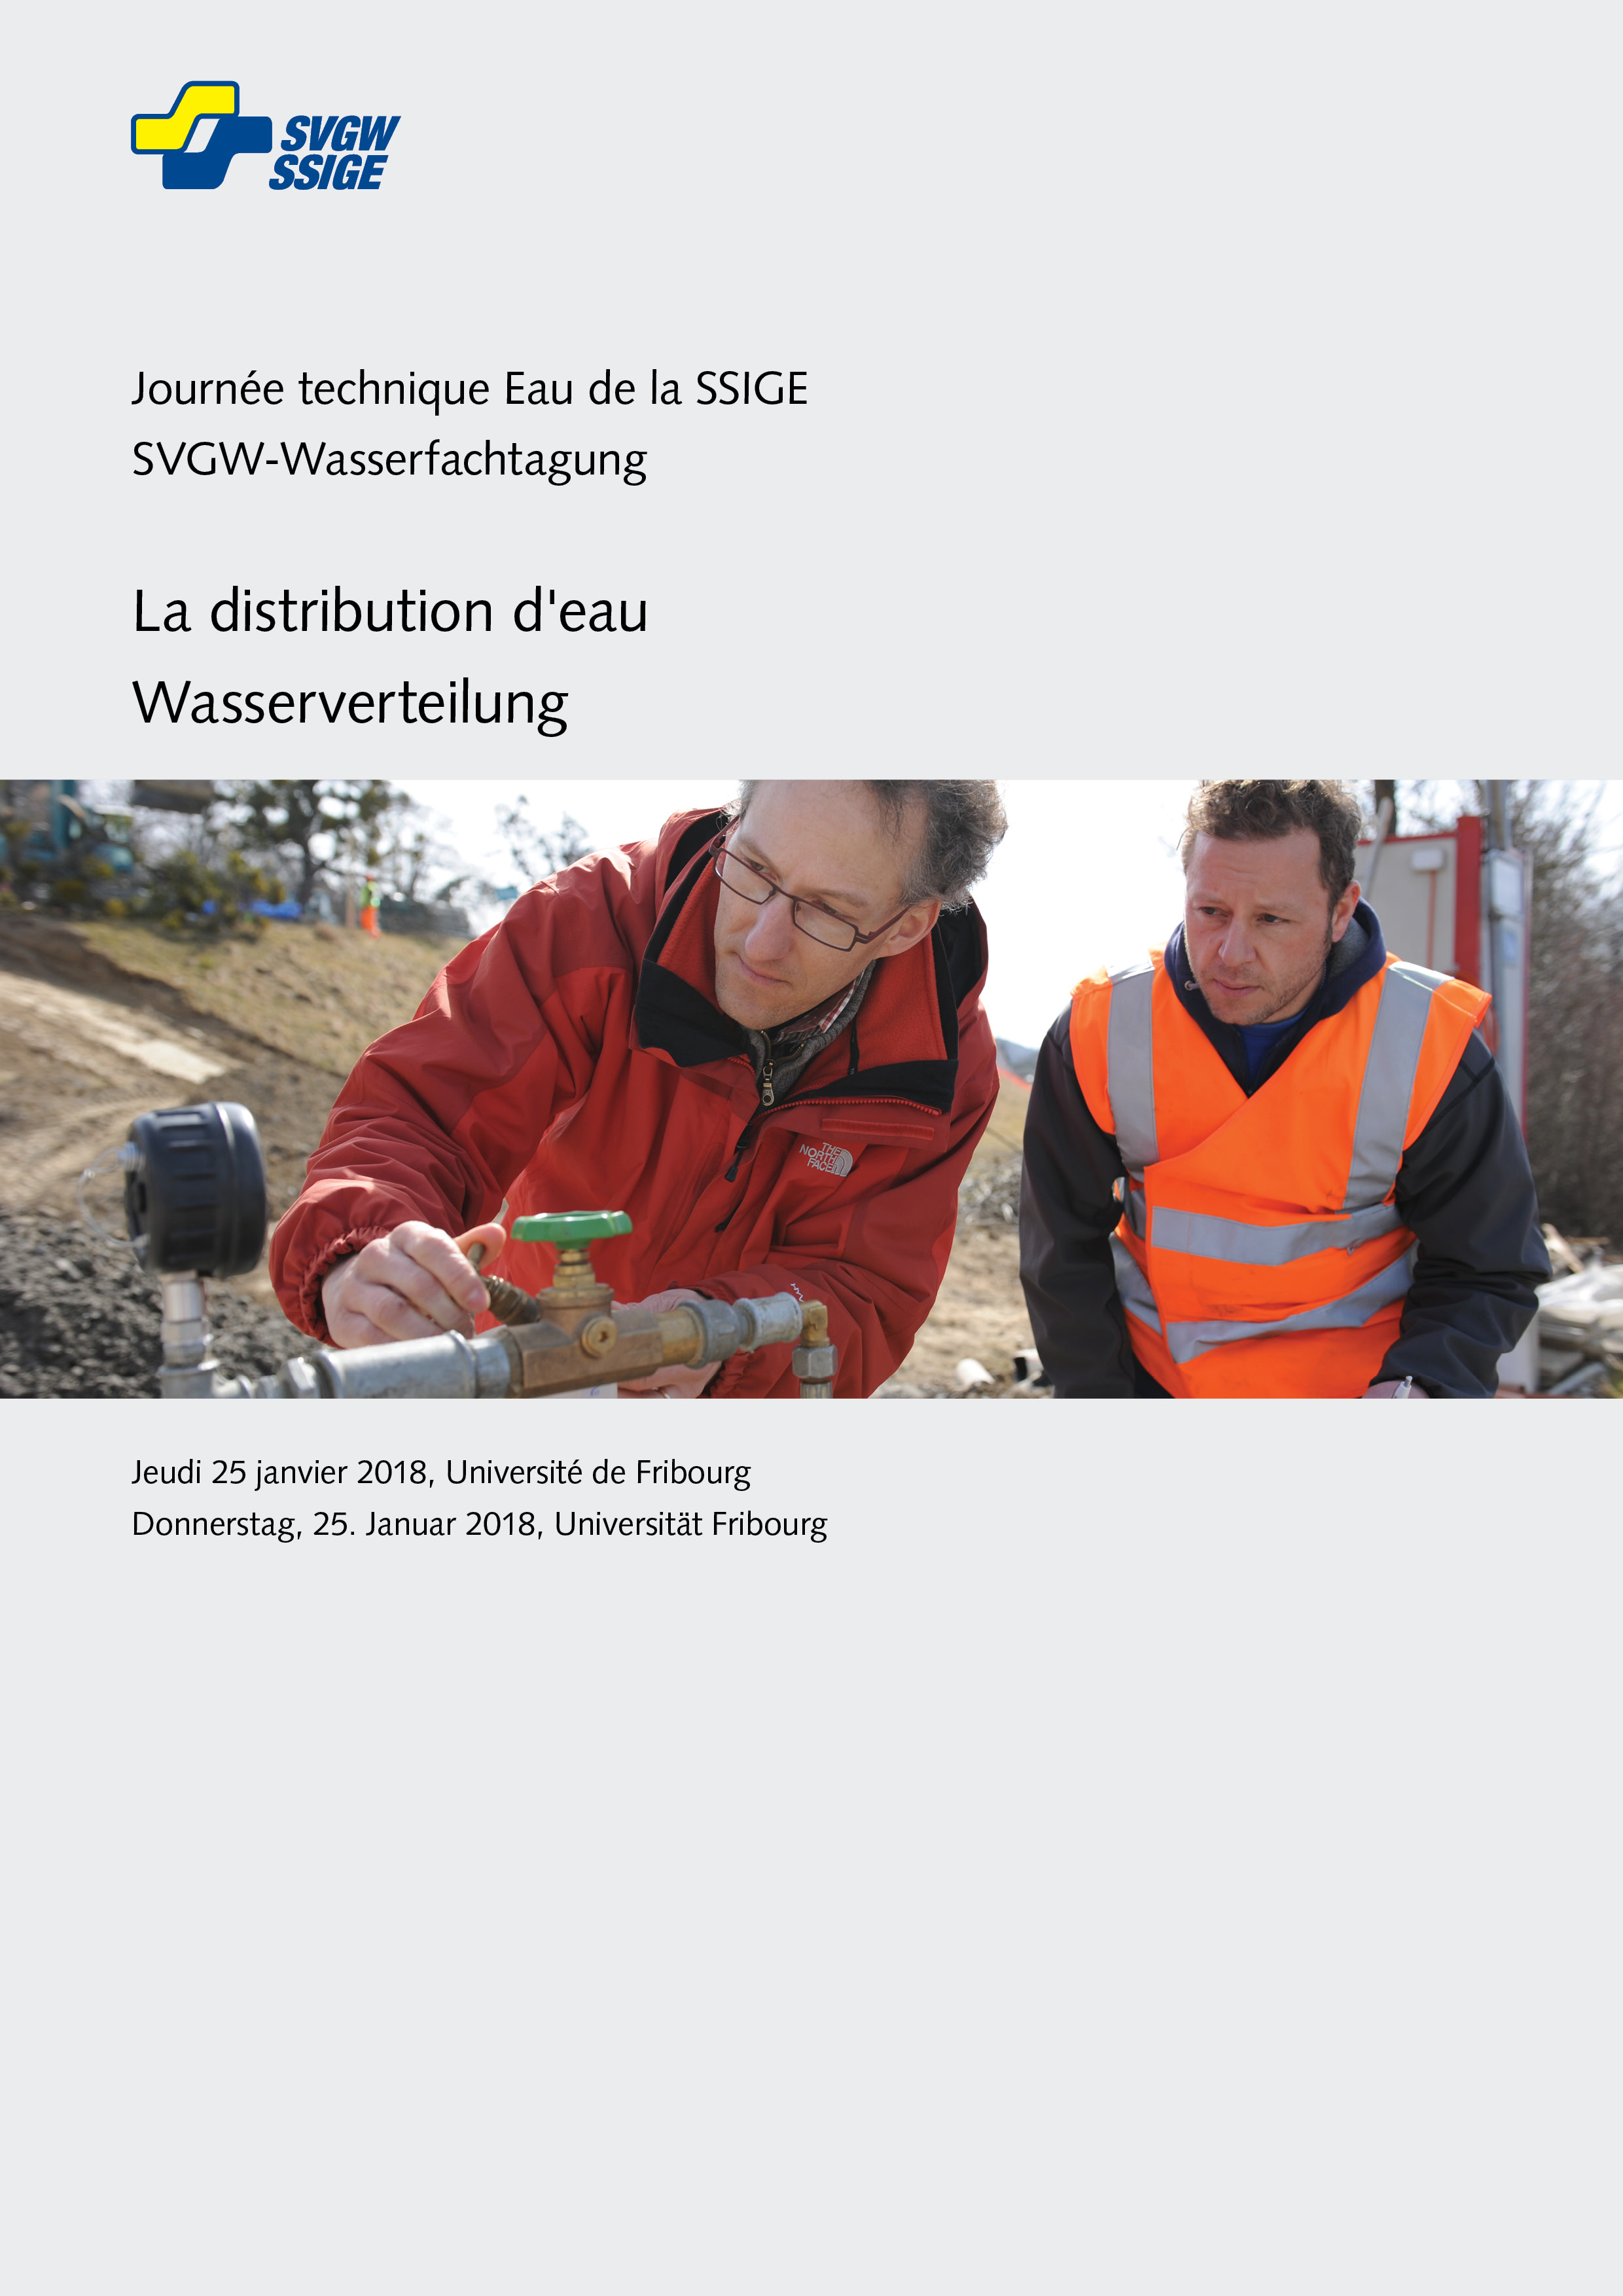 Wasserverteilung ¦ La distribution d'eau | SVGW-Wasserfachtagung 25. Januar 2018, Fribourg